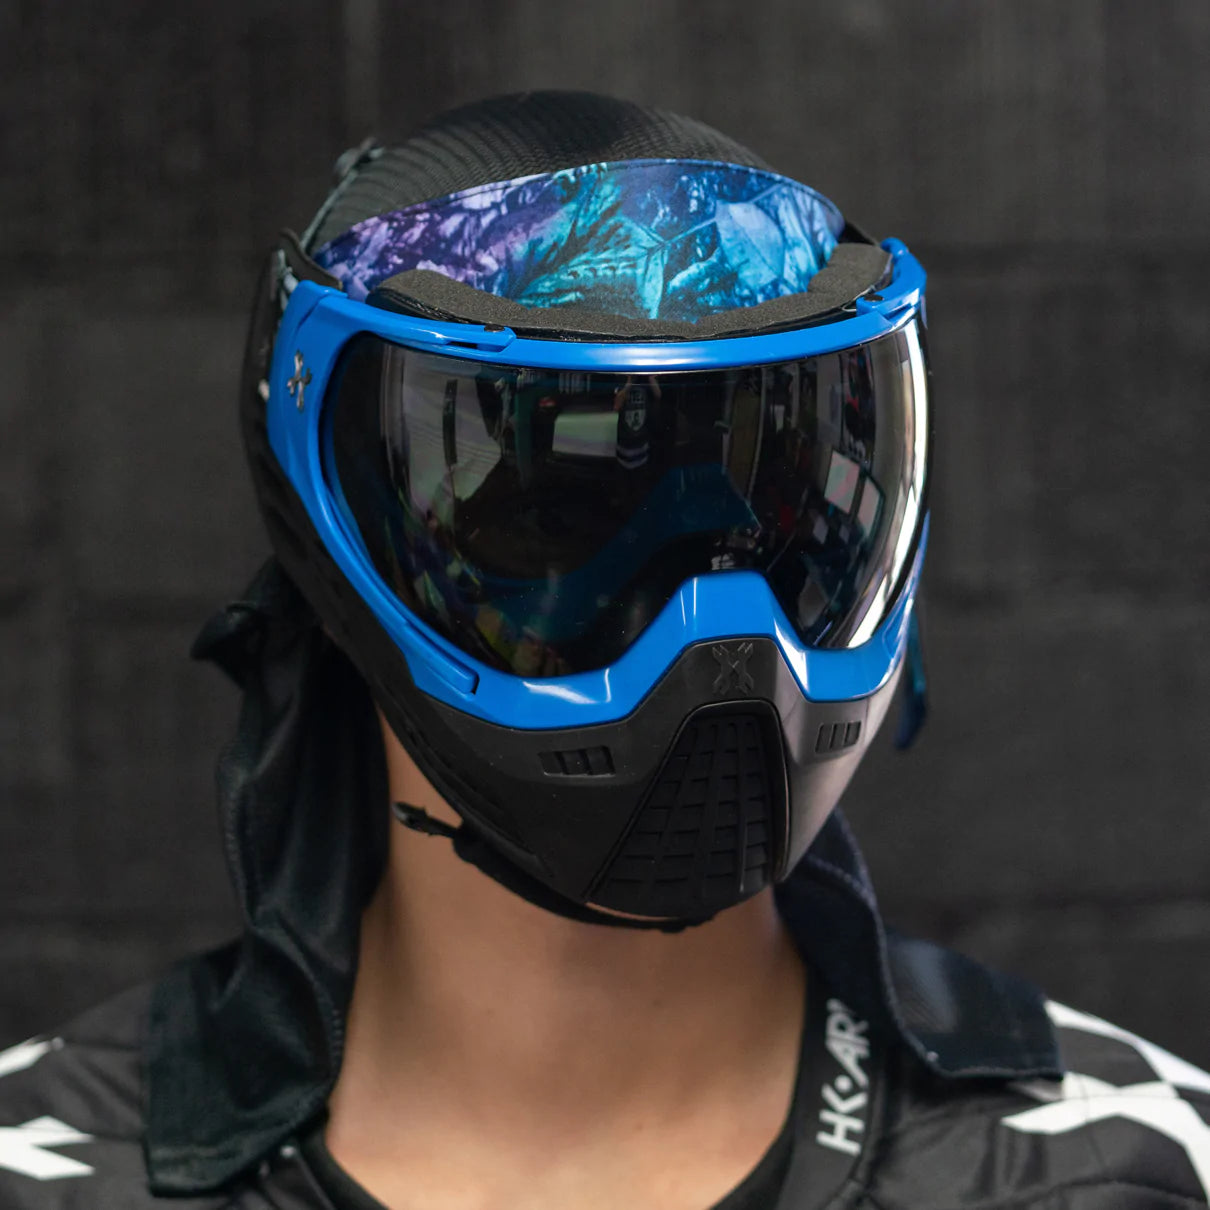 Klr Goggle Blackout Blue (Blue/Black) | Paintball Goggle | Mask | Hk Army